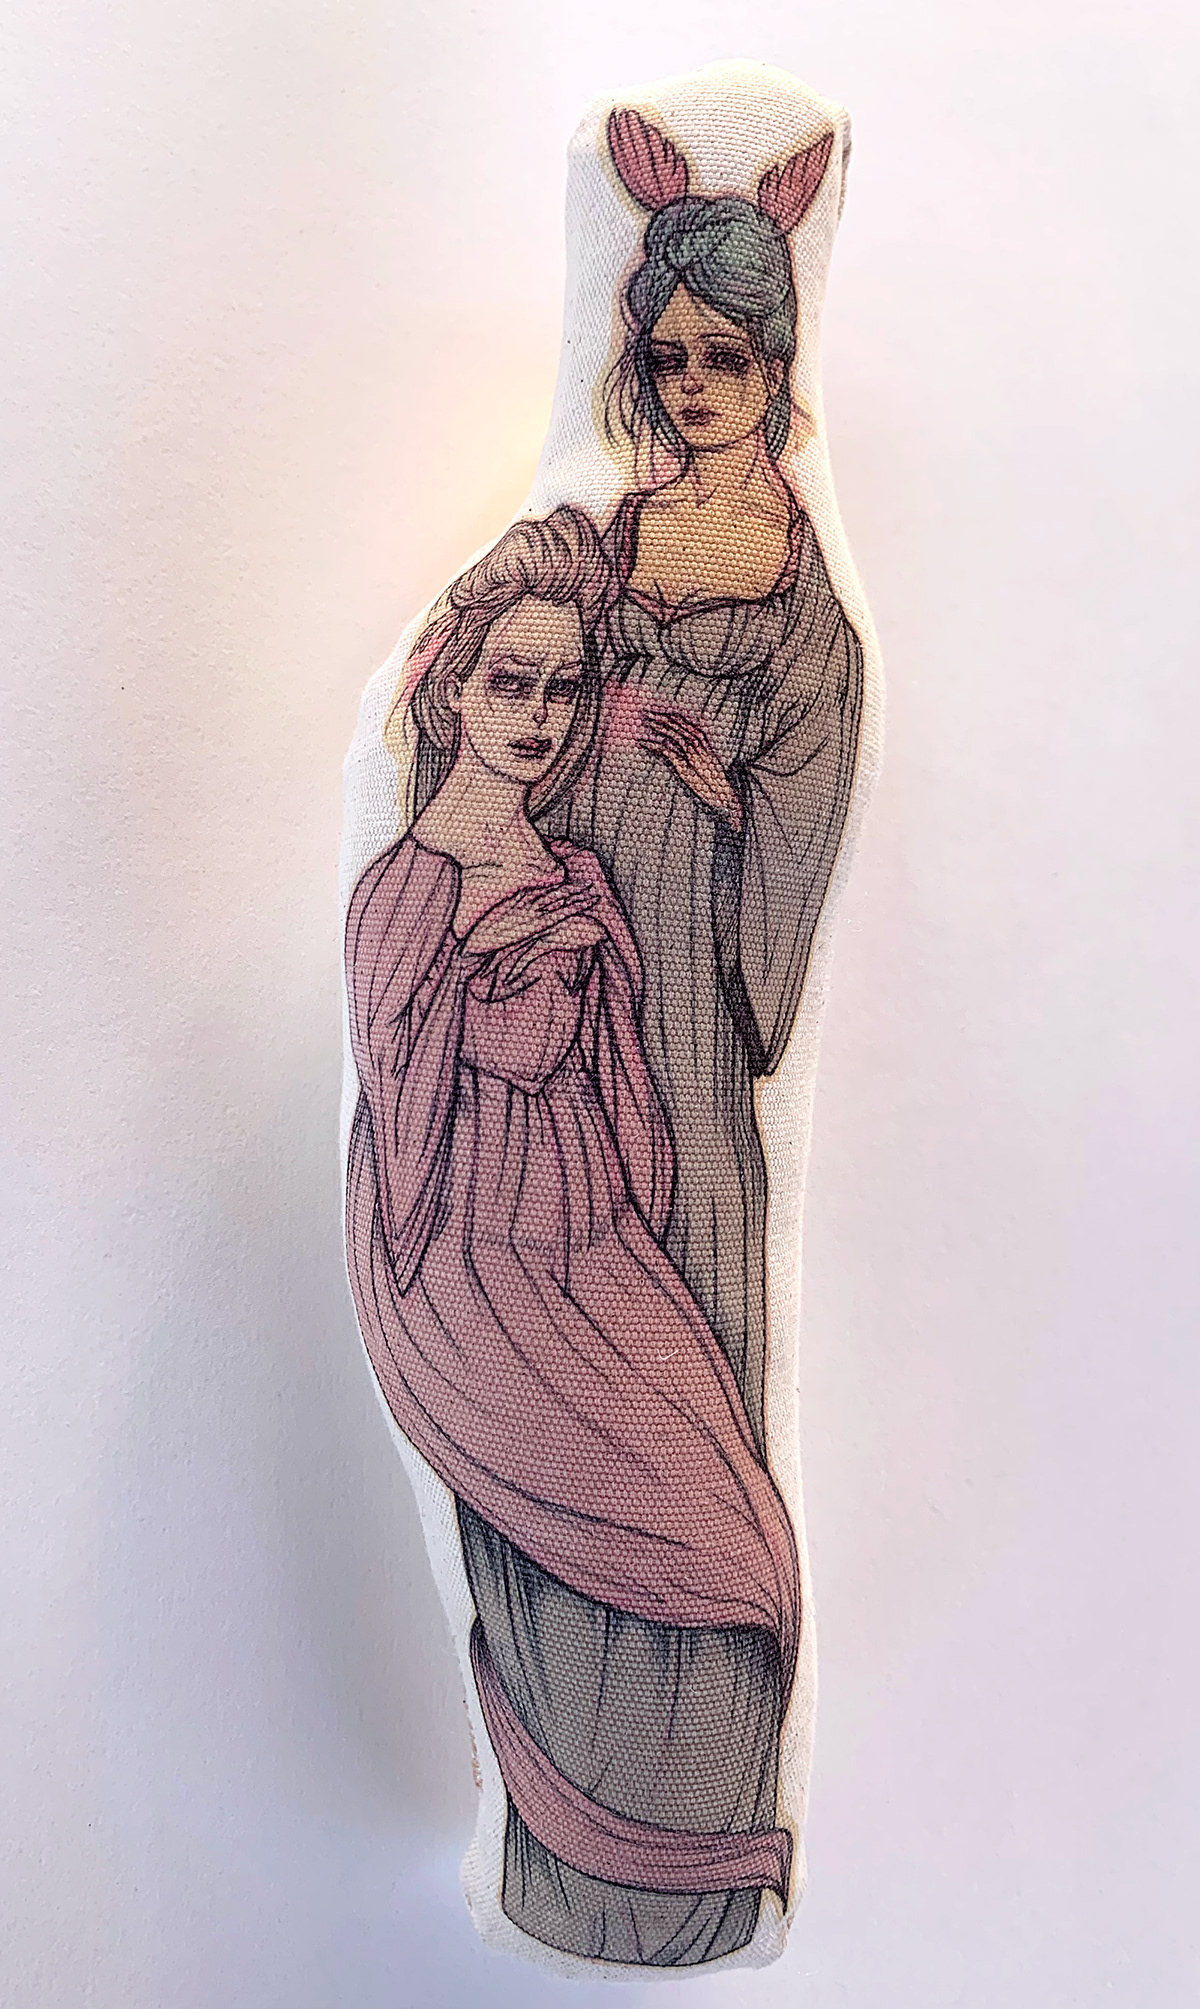 art Character design  Drawing  Ghosts gothic handmade ink plush stuffed women